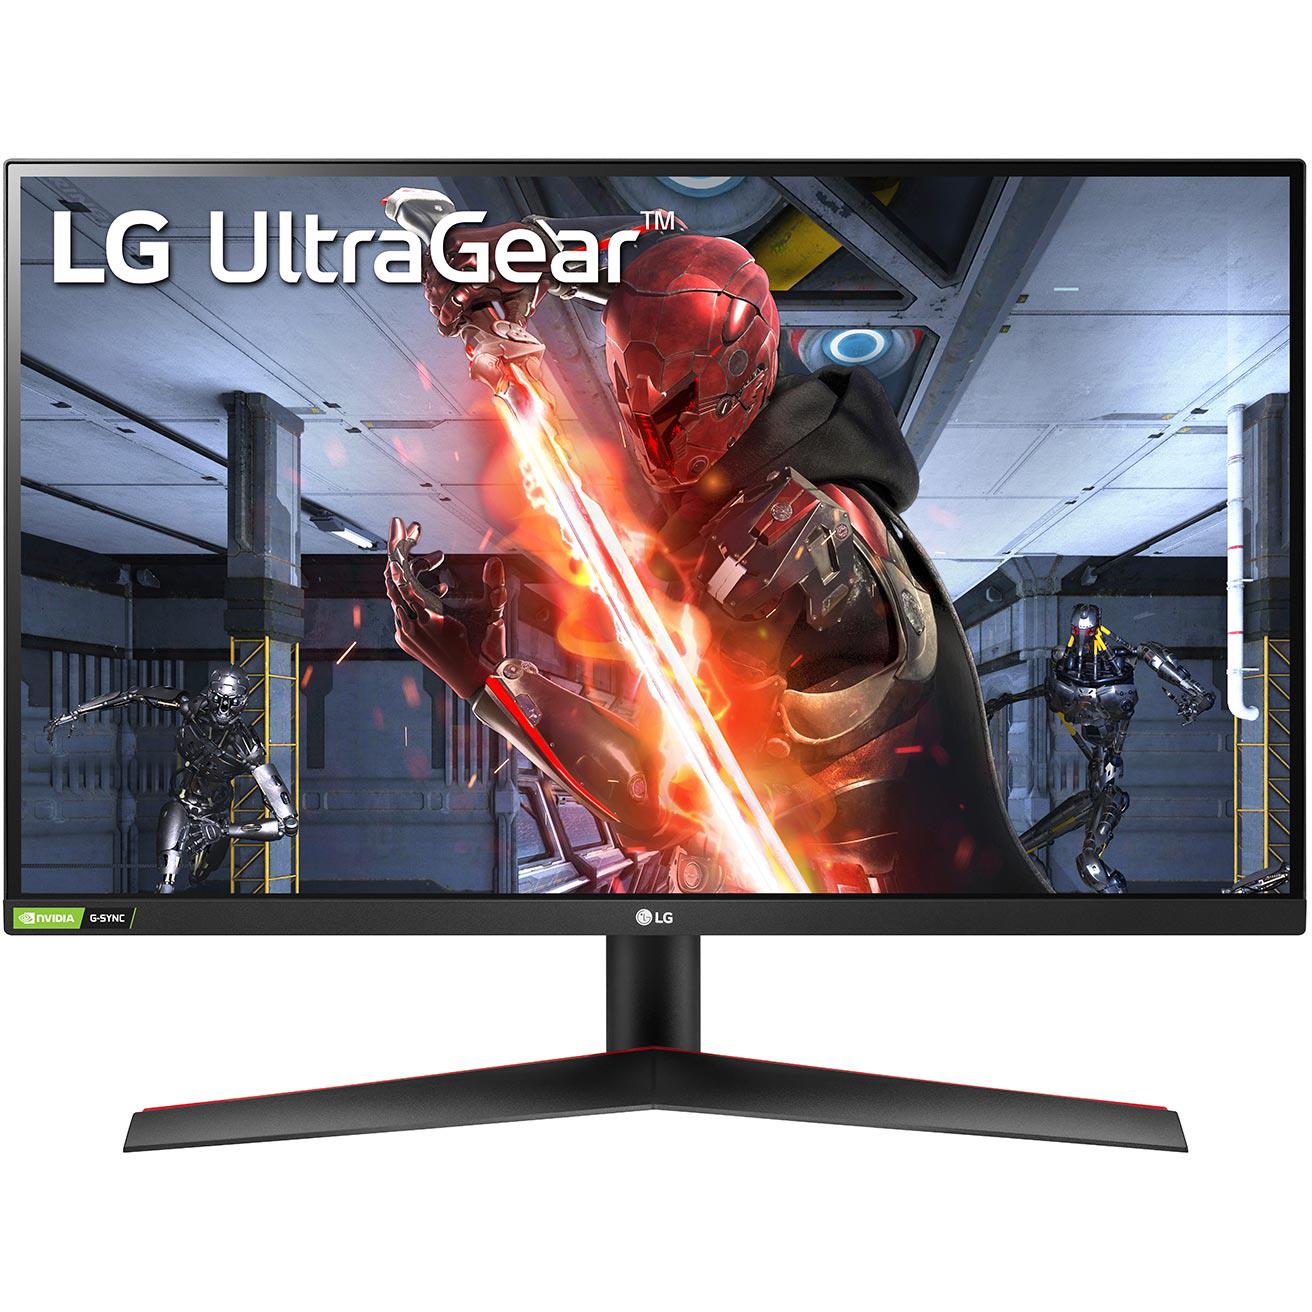 lg 27gn600-b 27" 144hz fhd ultra gear gaming monitor